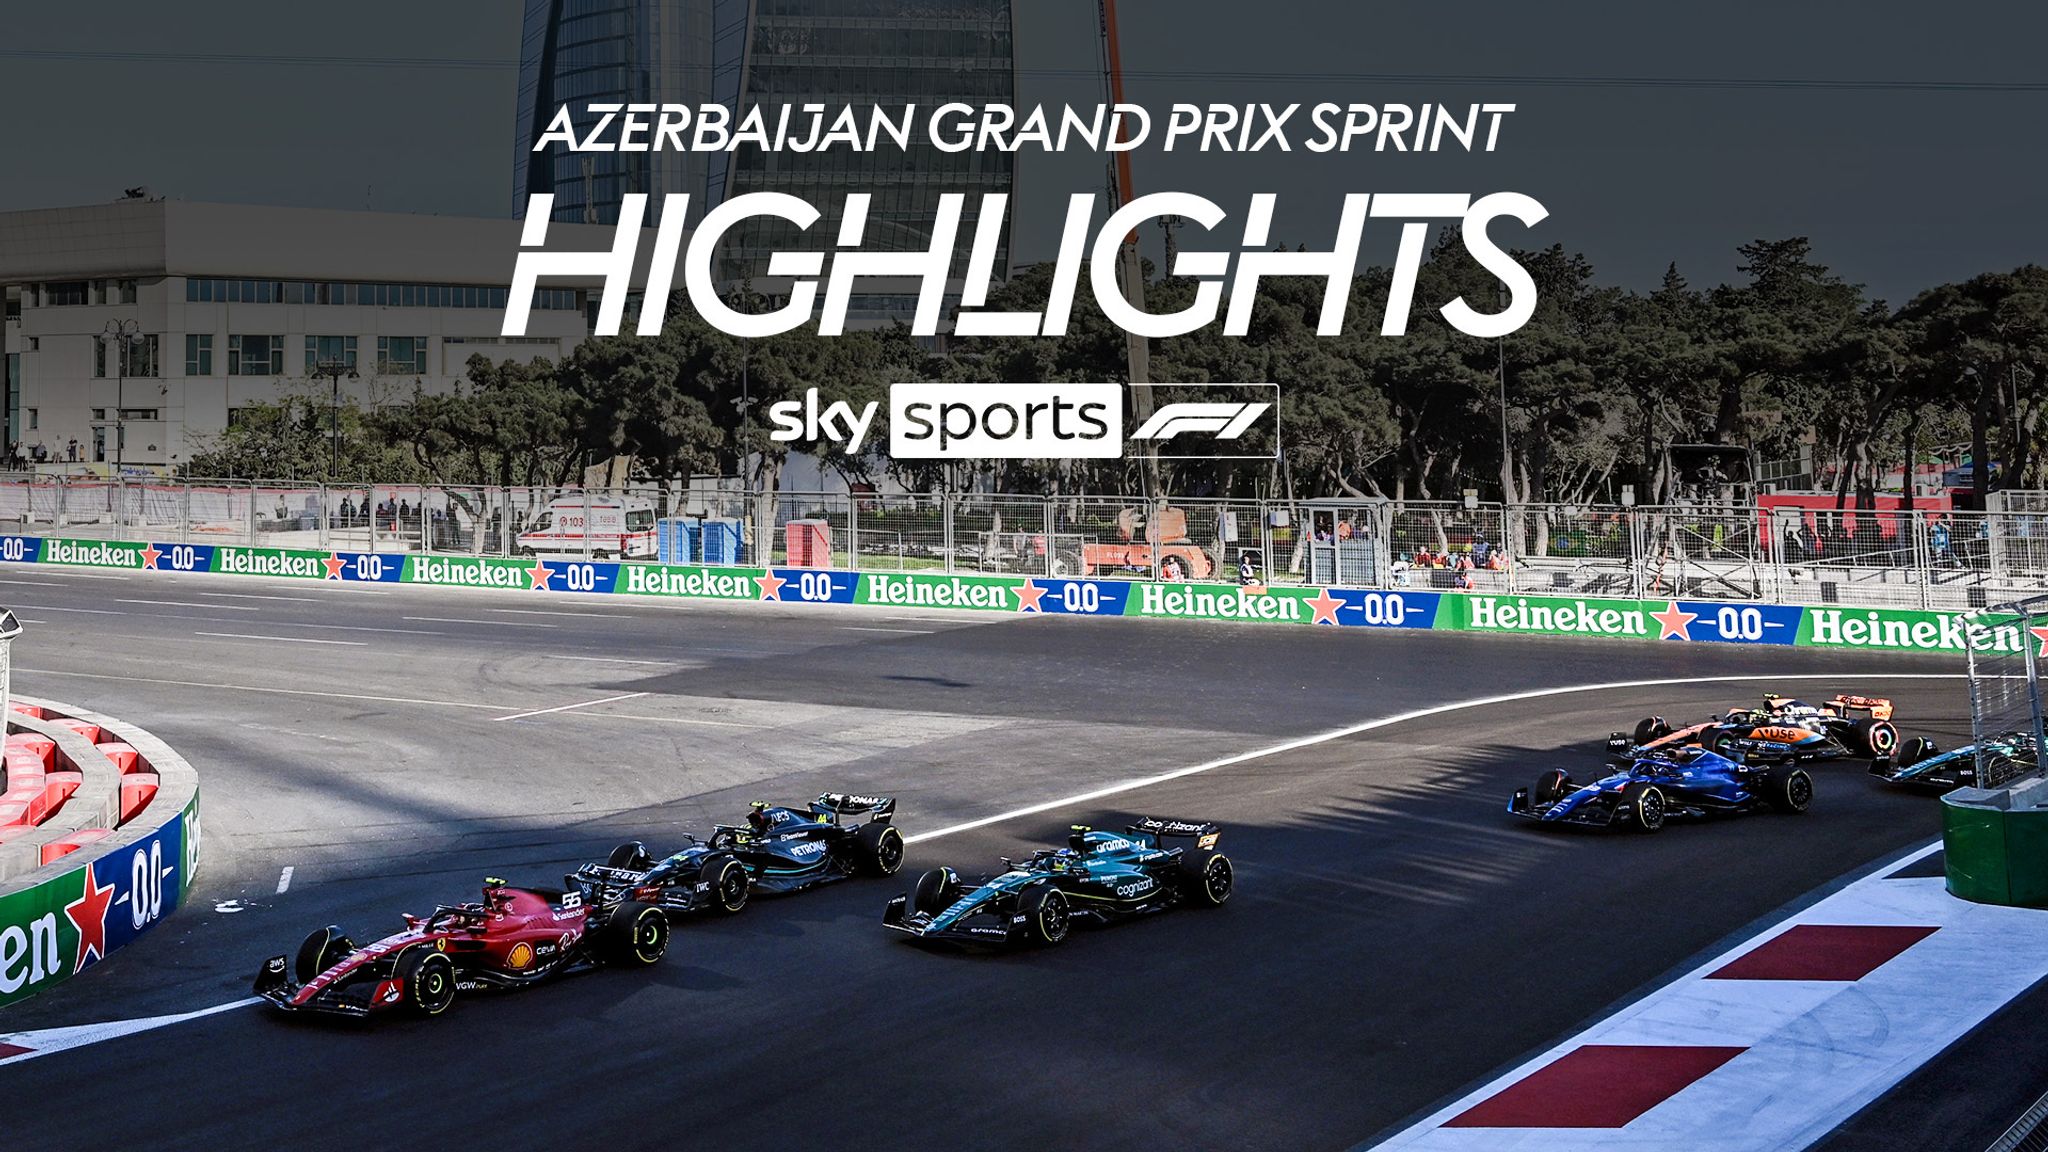 Azerbaijan Grand Prix Sprint highlights Video Watch TV Show Sky Sports